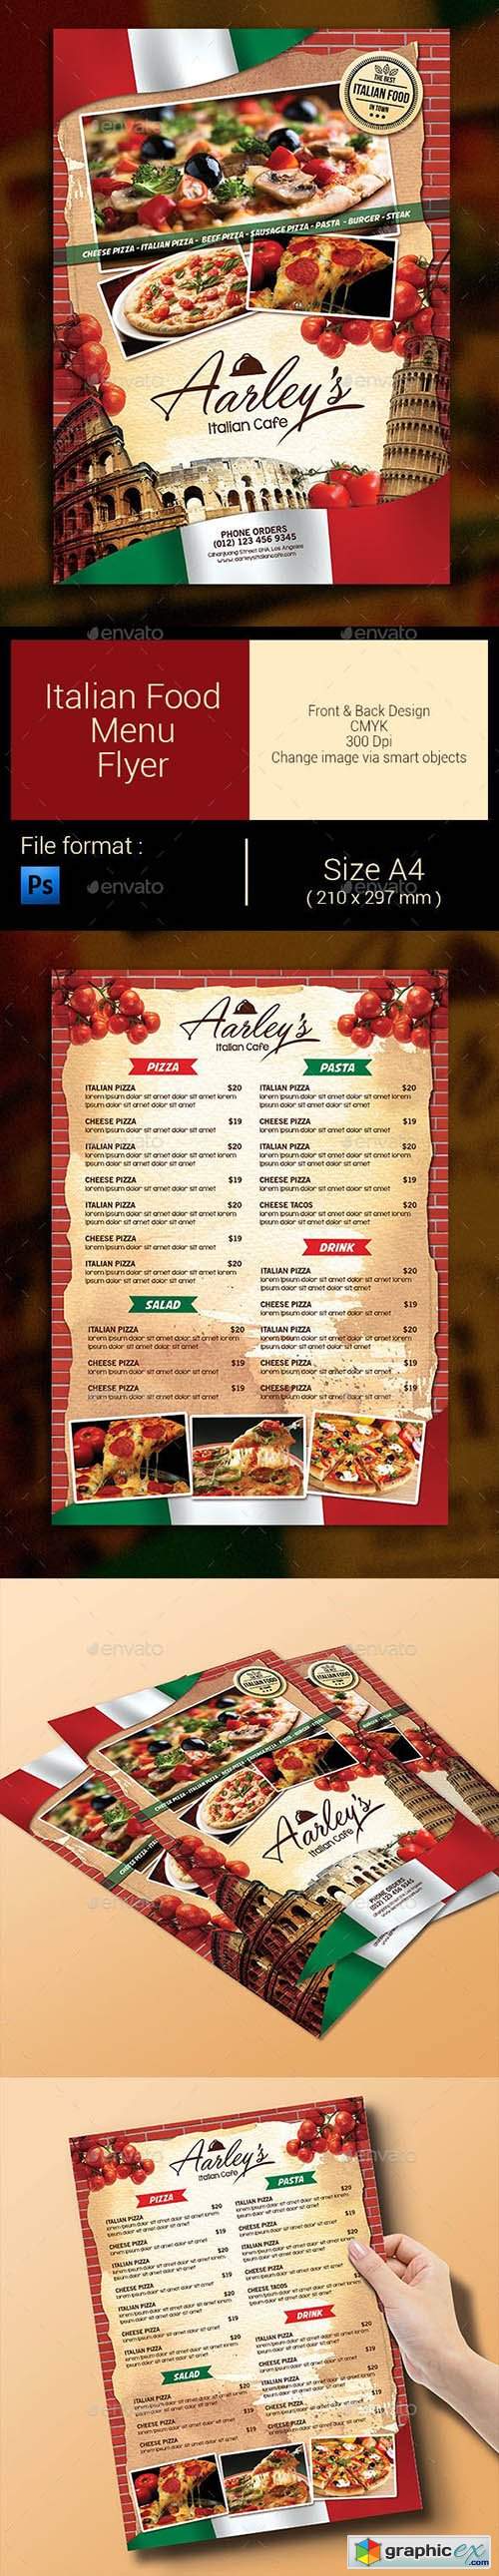 Italian Food Menu Flyer